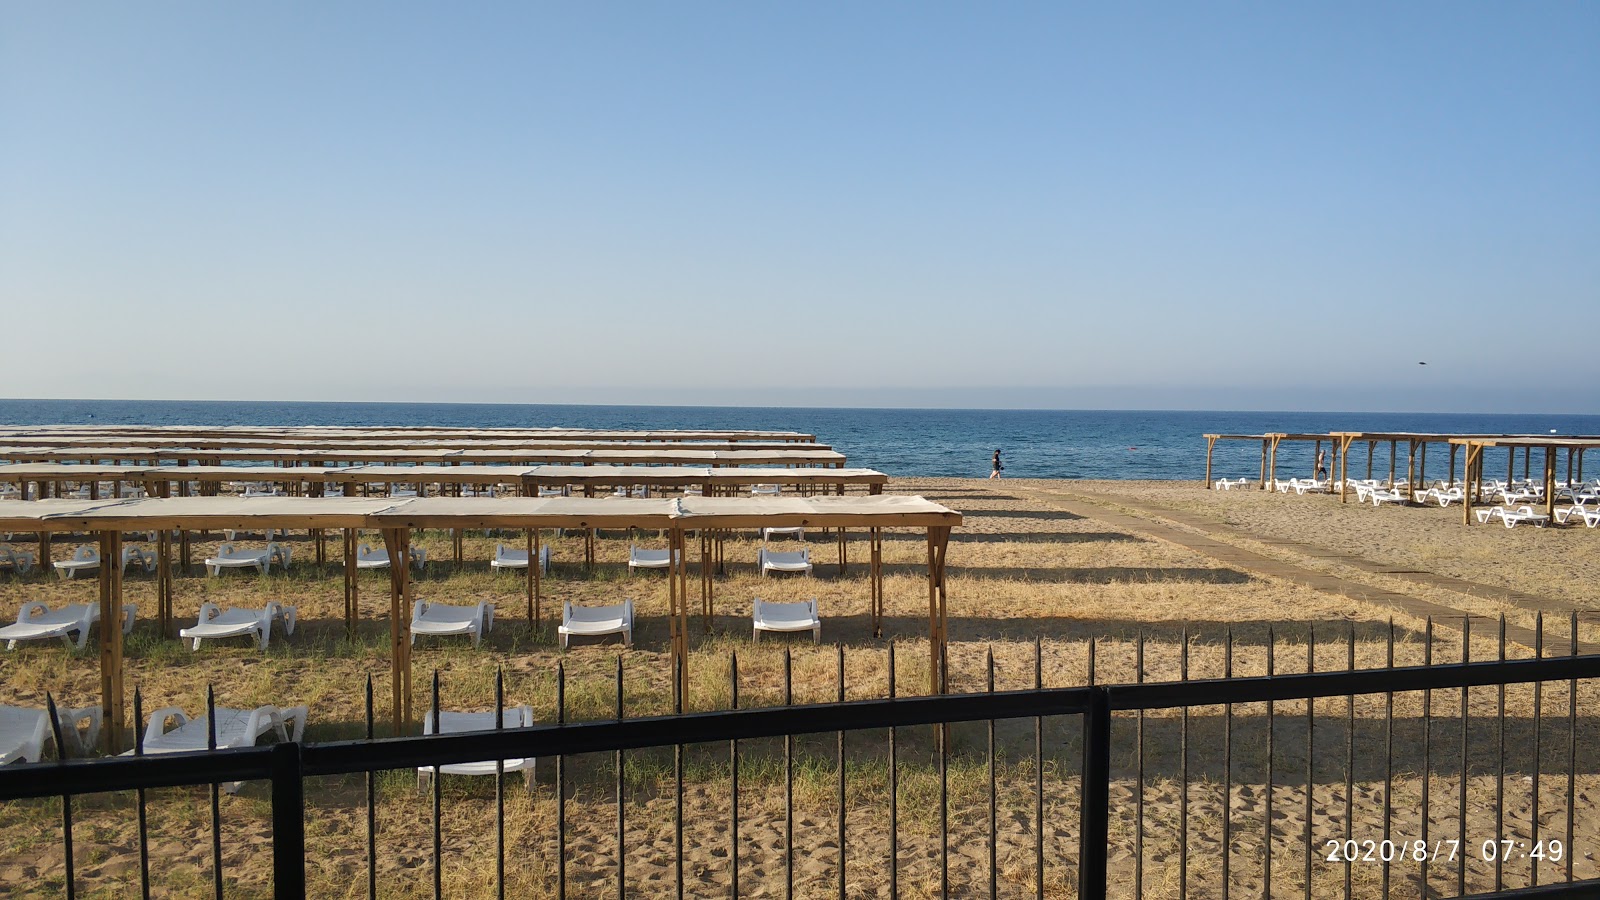 Photo of Sarımsaklı beach beach resort area